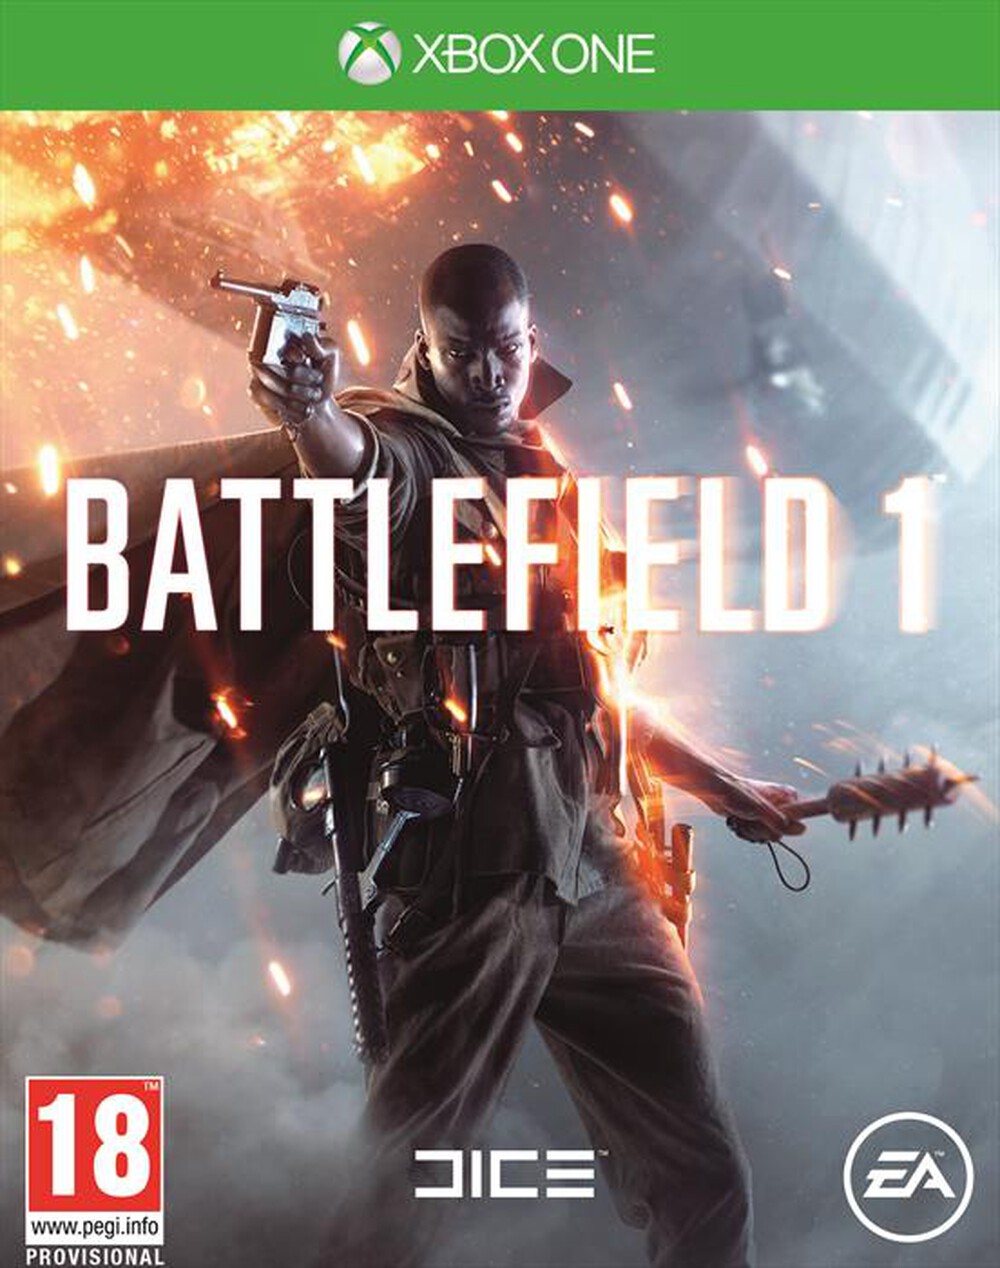 "ELECTRONIC ARTS - Battlefield 1 Xbox One"